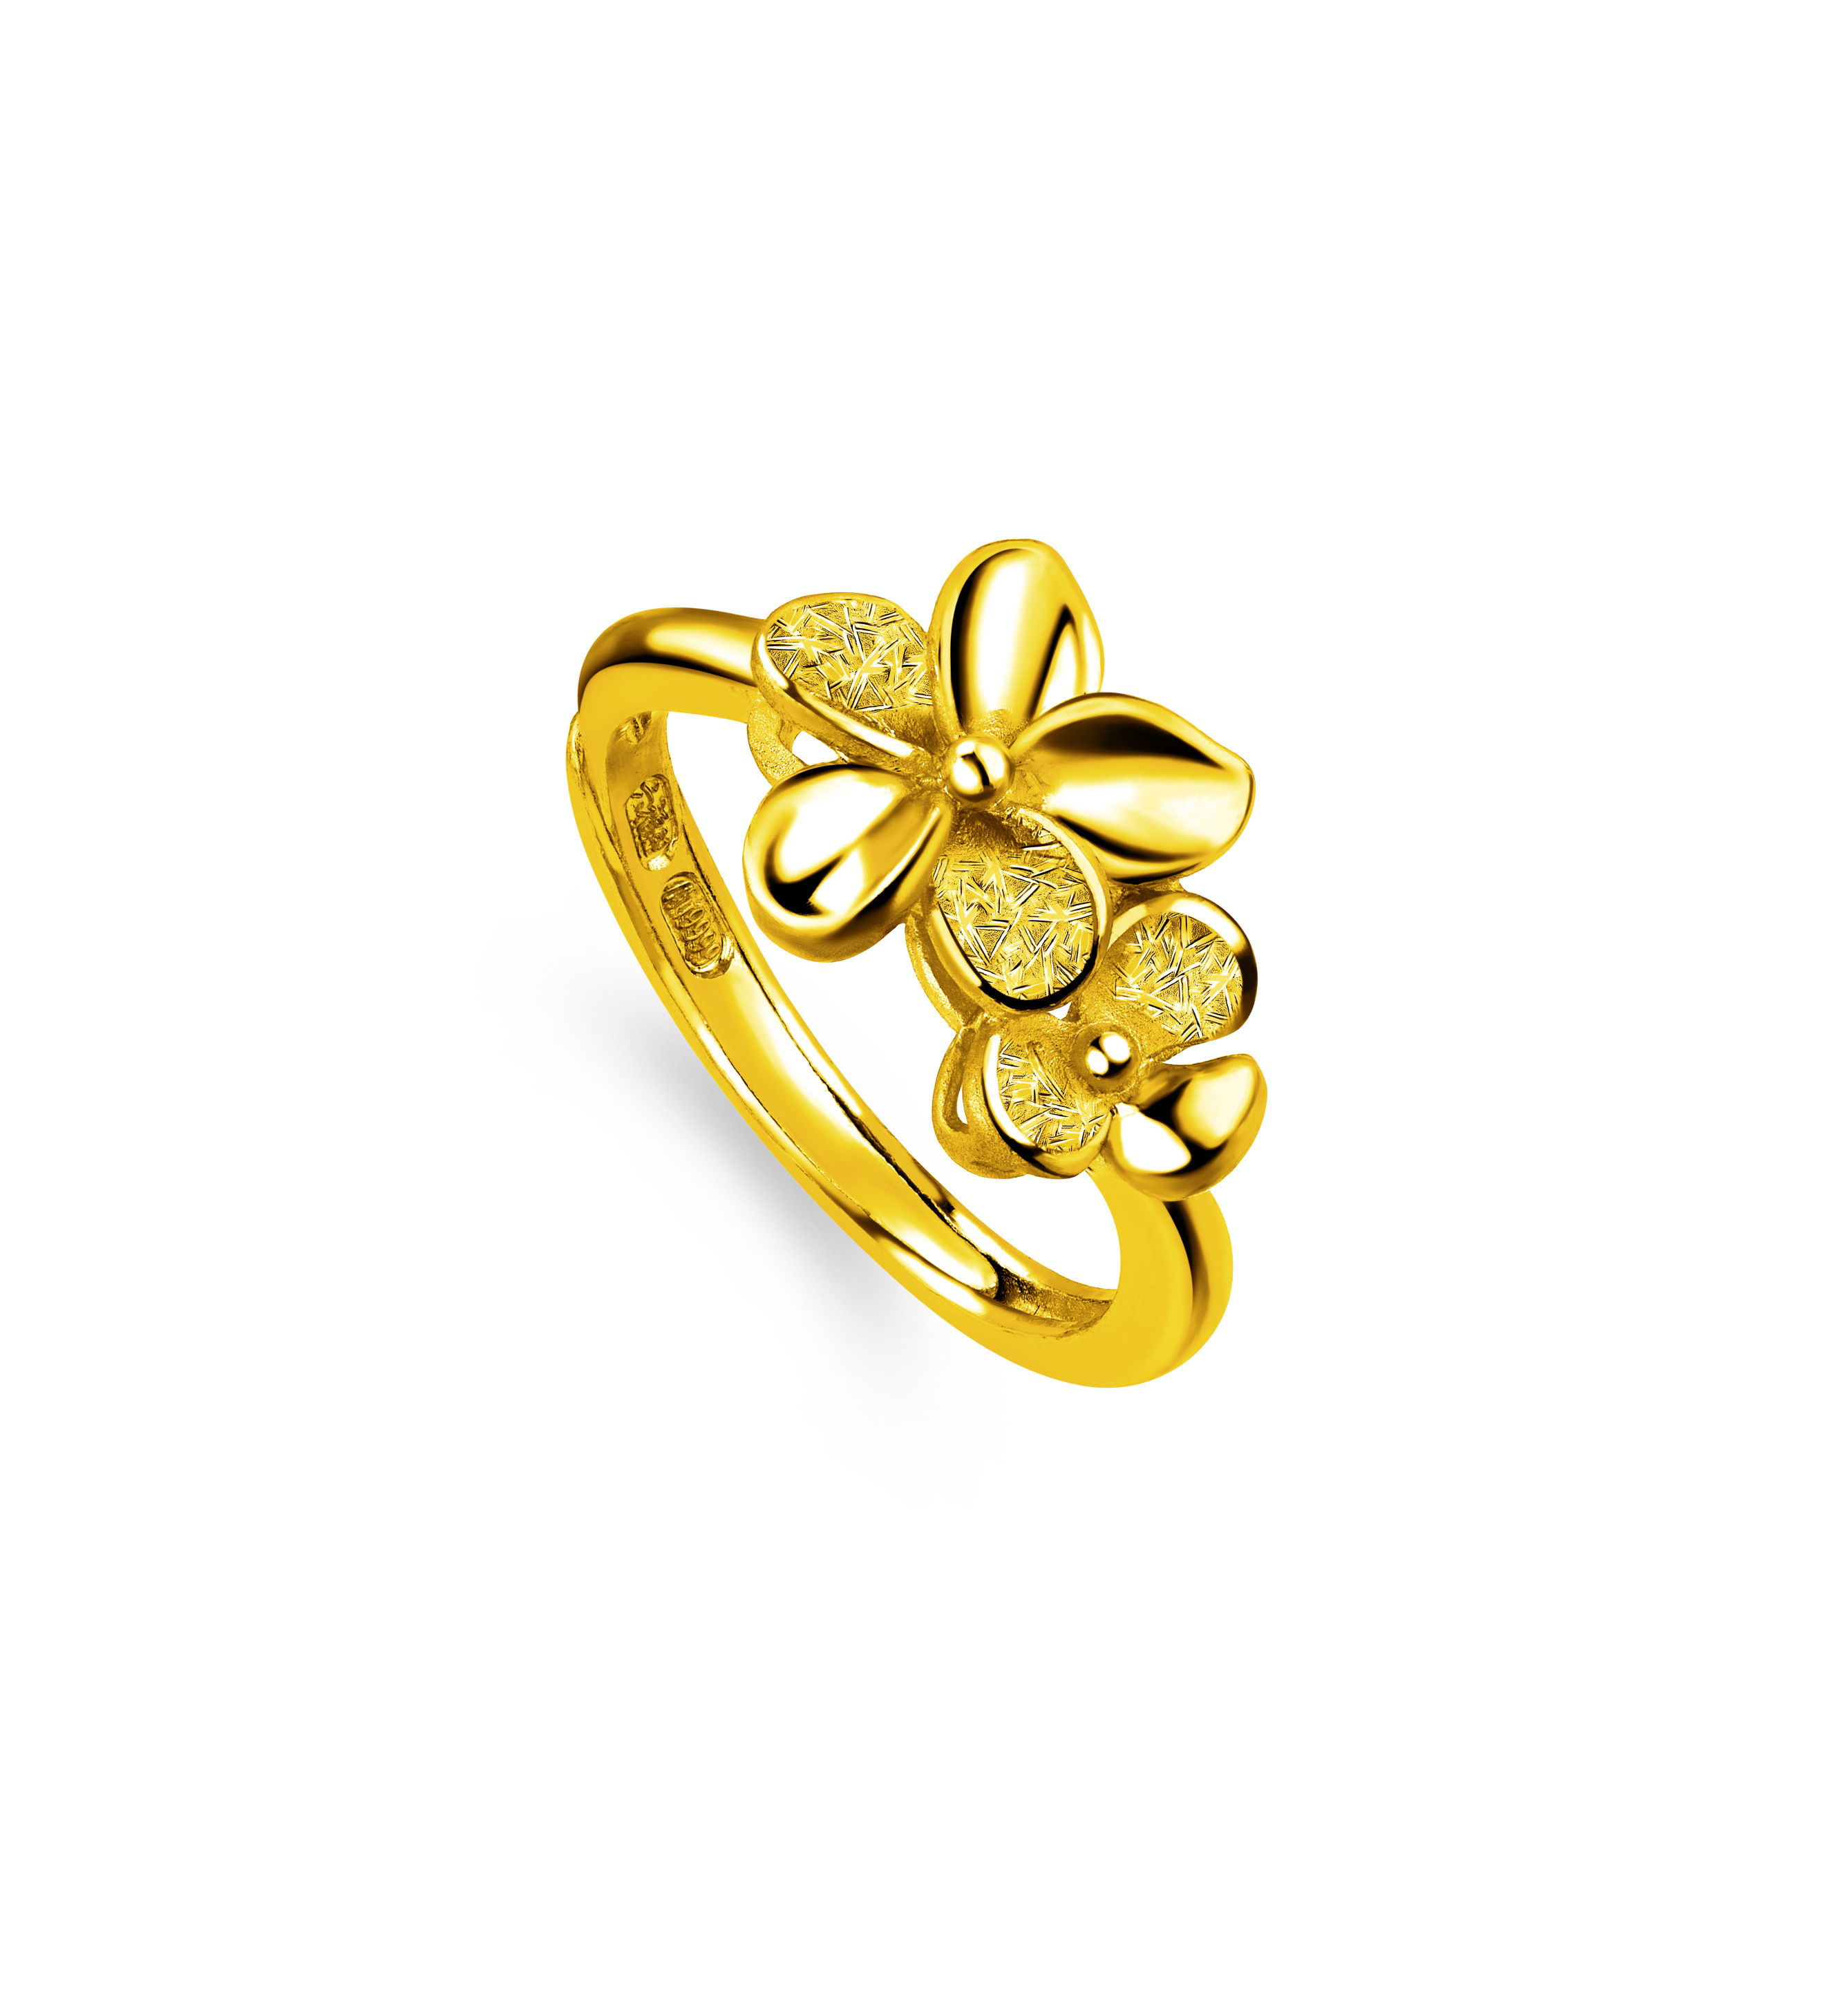 Beloved Collection "Floral Love" Wedding Gold Ring